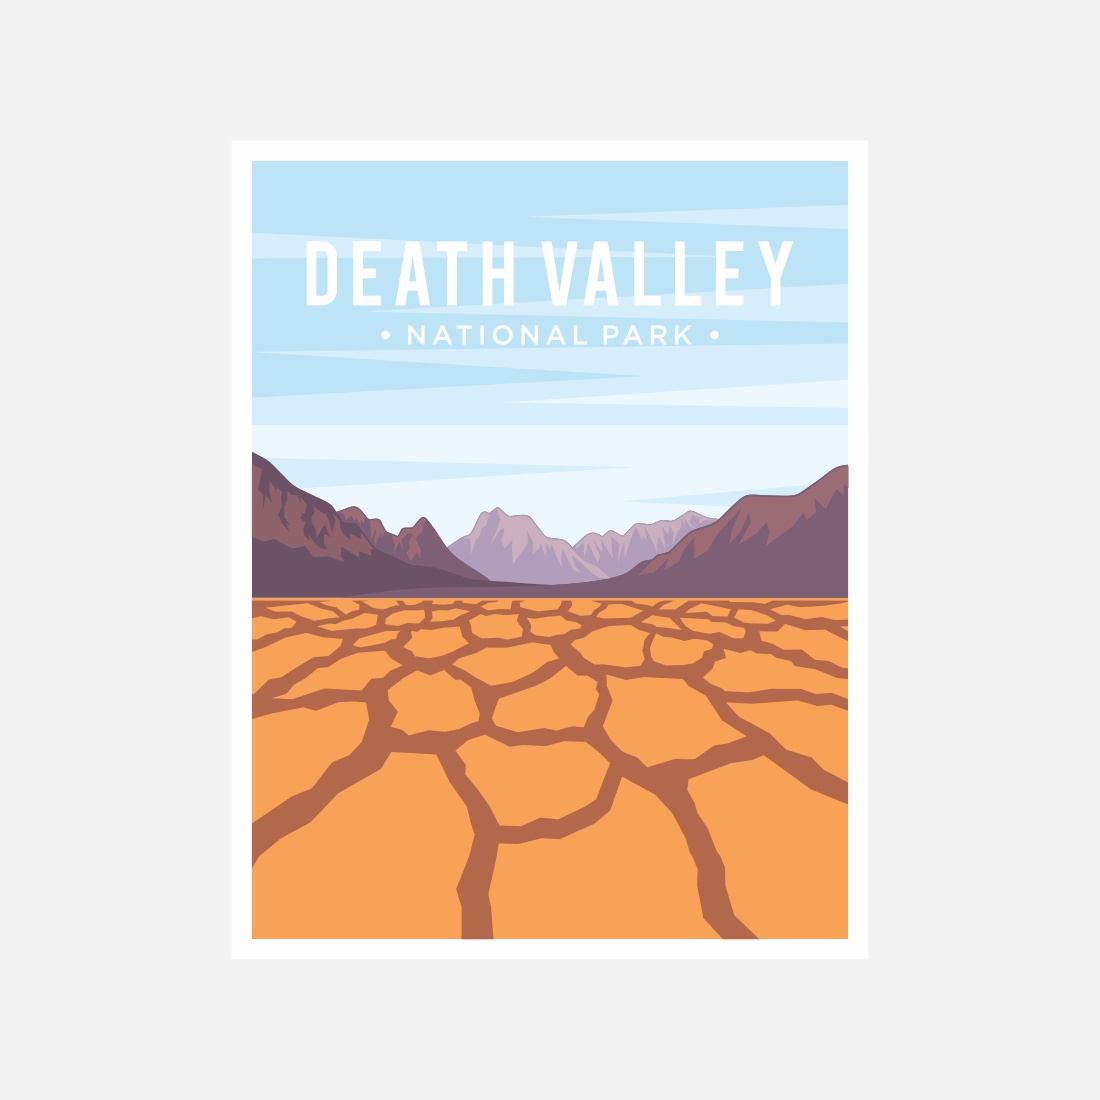 Death Valley National Park poster vector illustration design – Only $8 cover image.